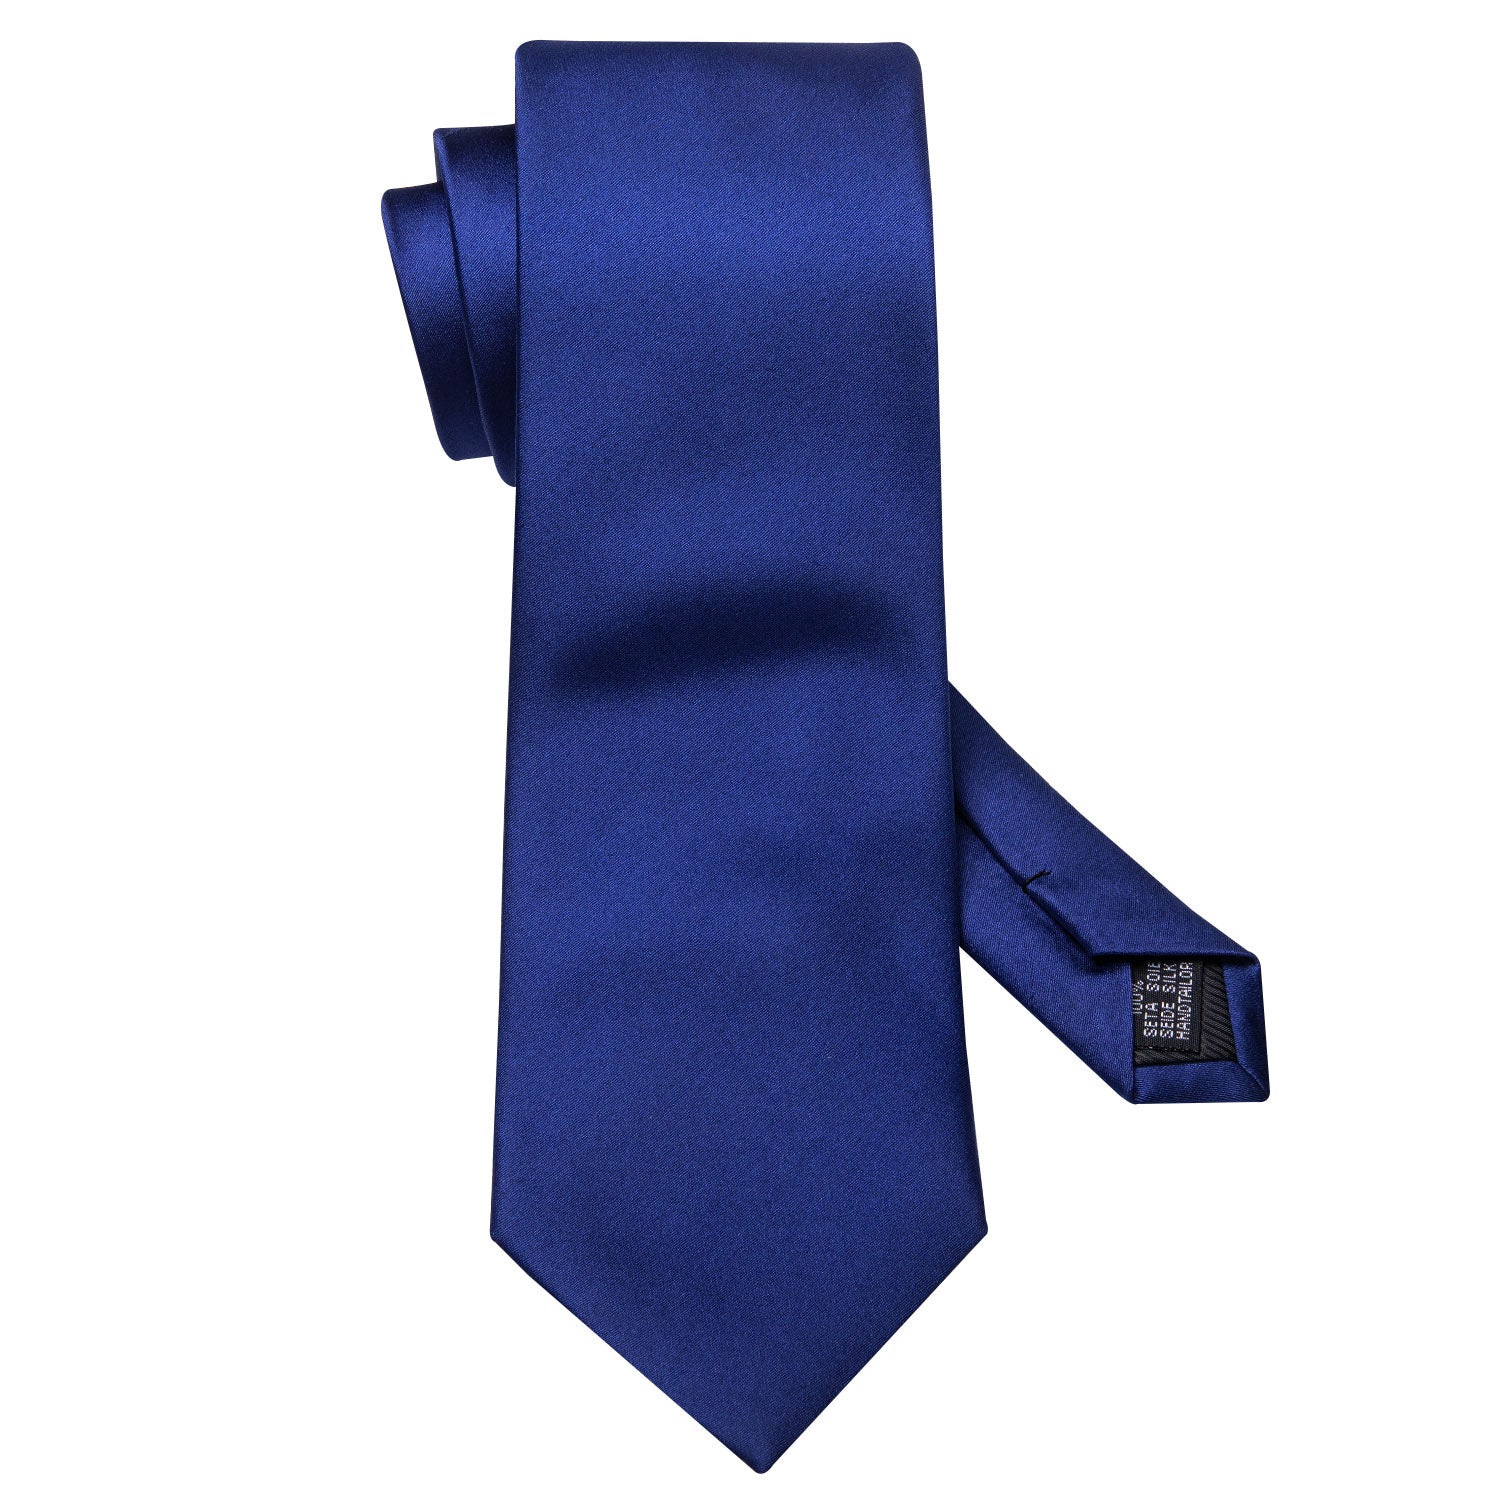 Barry.wang Blue Tie Solid Silk Tie Hanky Cufflinks Set Classic Hot